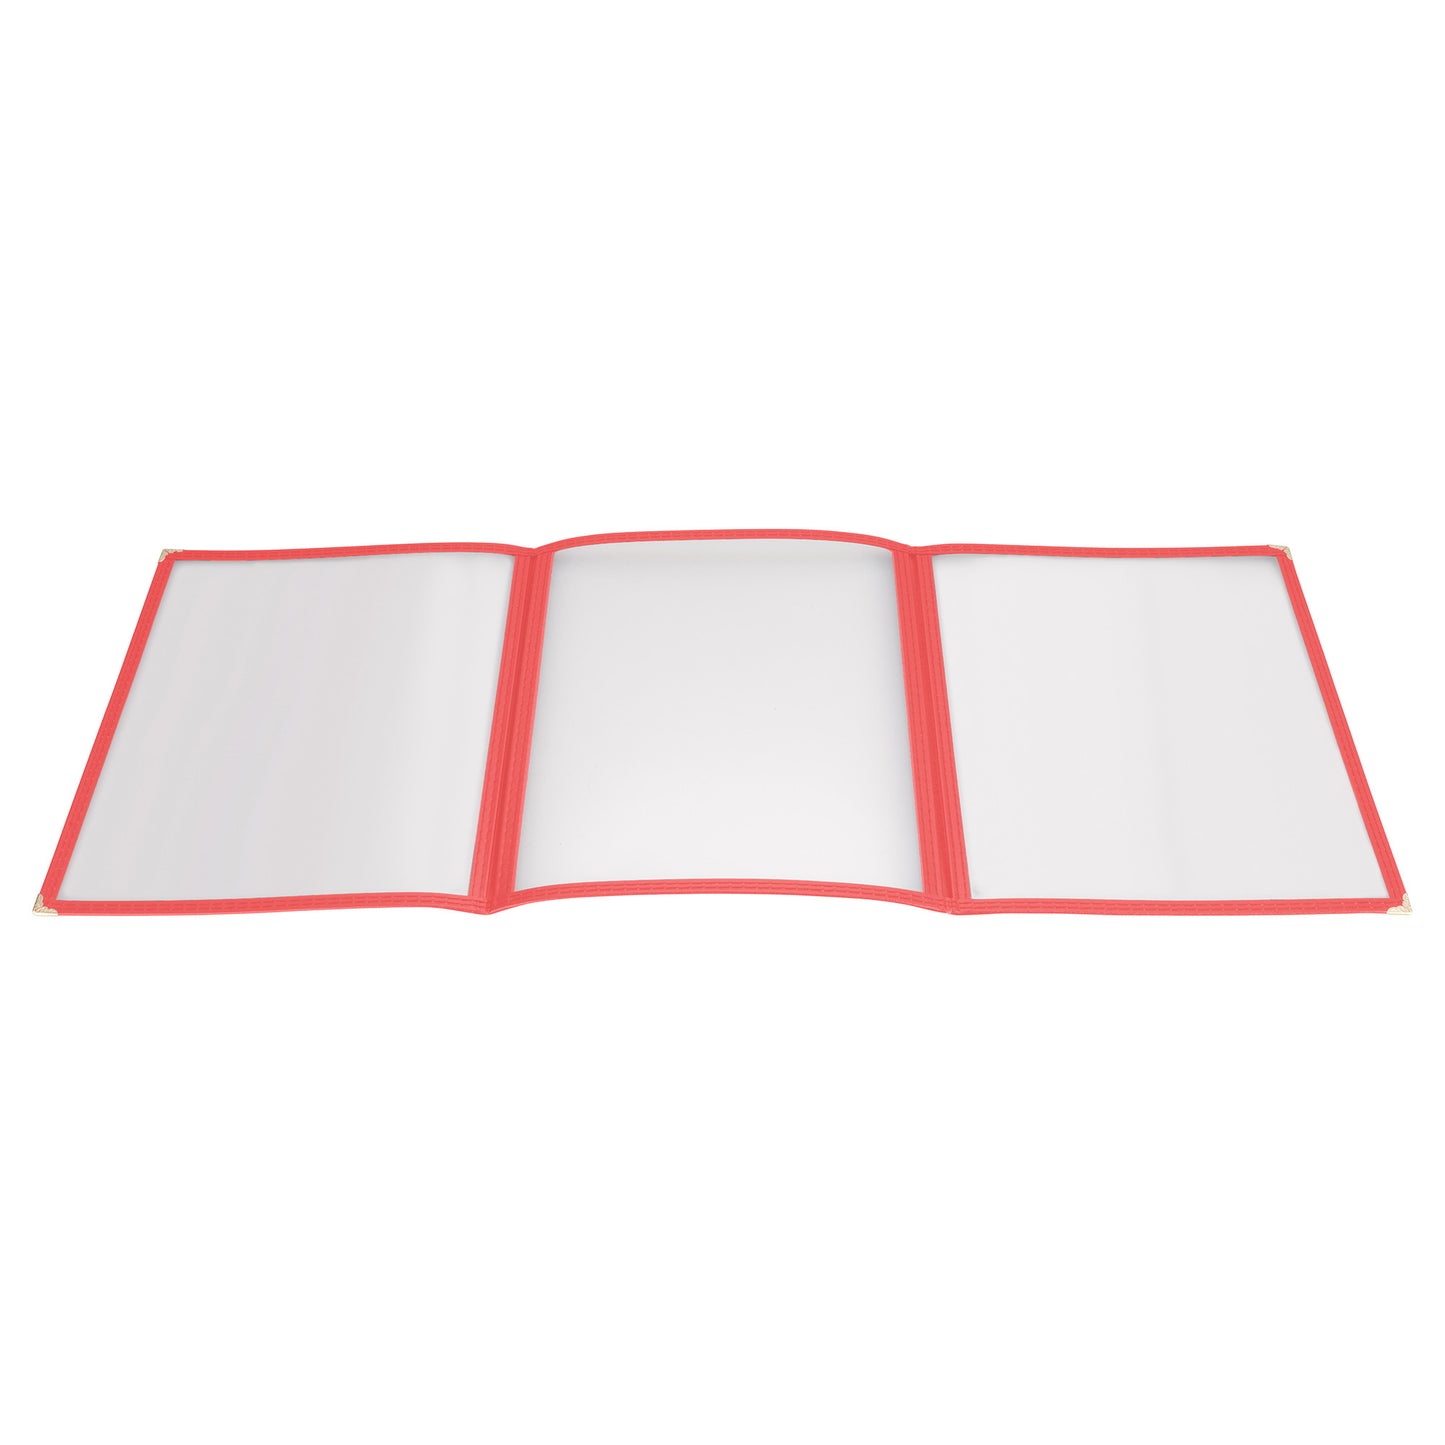 PMCT-9R - Tri-Fold Triple Panel Menu Cover, 9-1/2" x 12-1/8" - Red